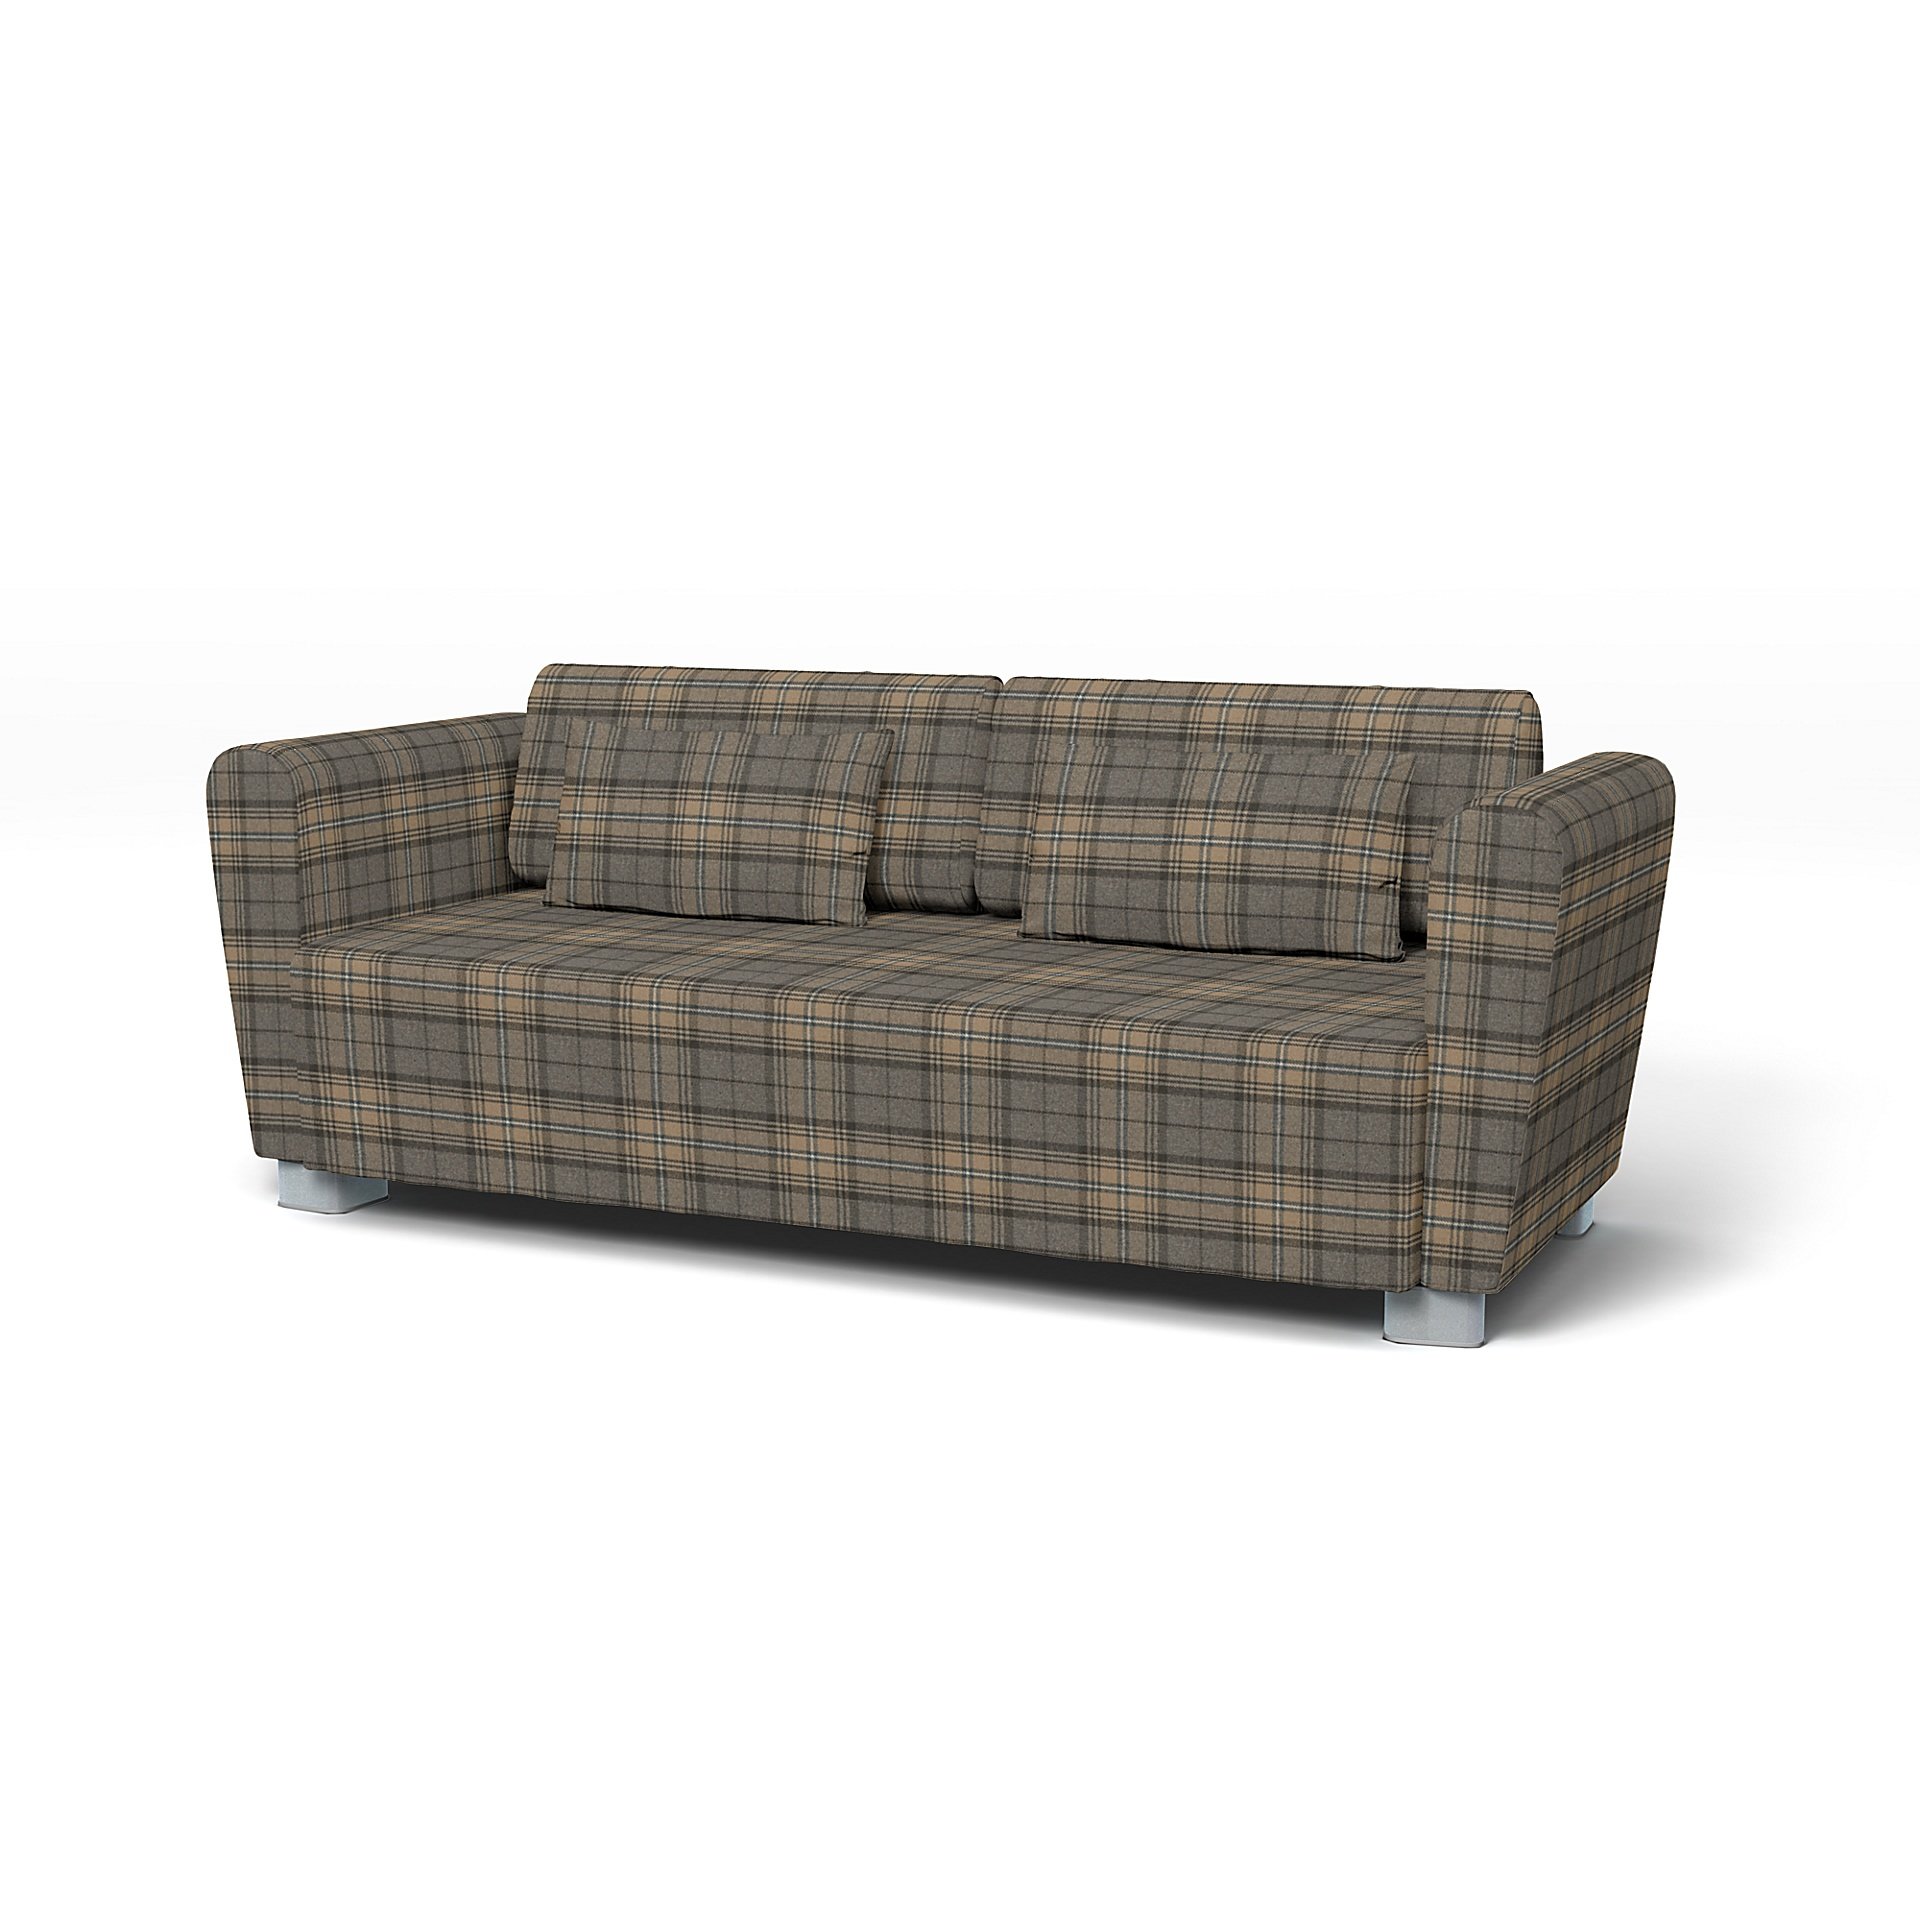 IKEA - Mysinge 2 Seater Sofa Cover, Bark Brown, Wool - Bemz